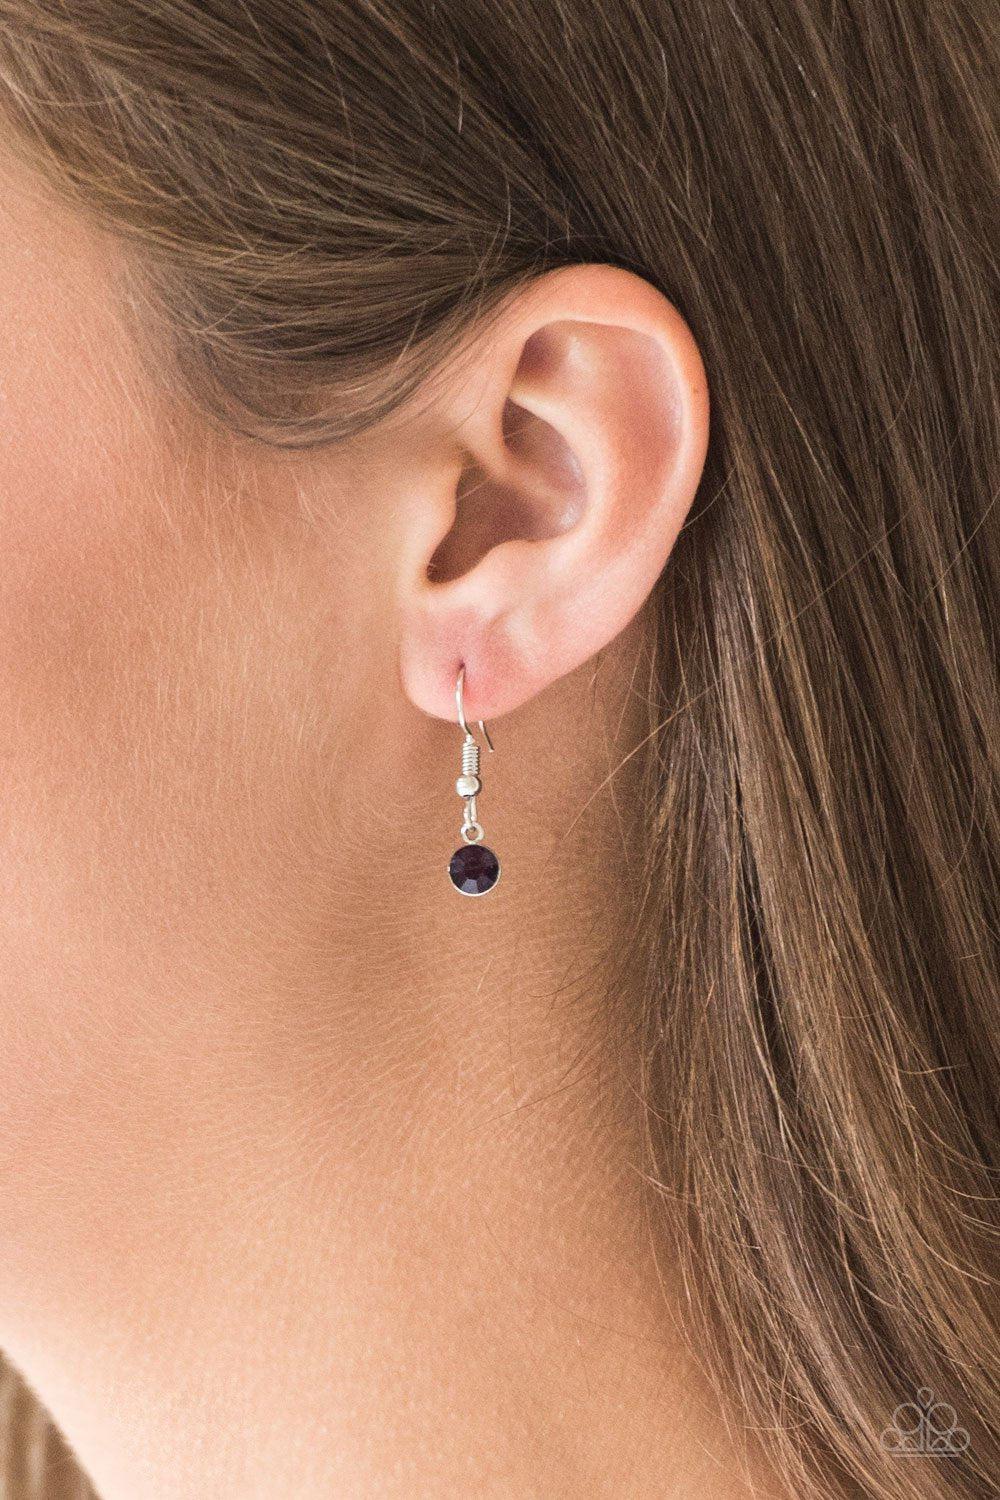 Sparkling Stargazer Purple Rhinestone Necklace - Paparazzi Accessories-CarasShop.com - $5 Jewelry by Cara Jewels